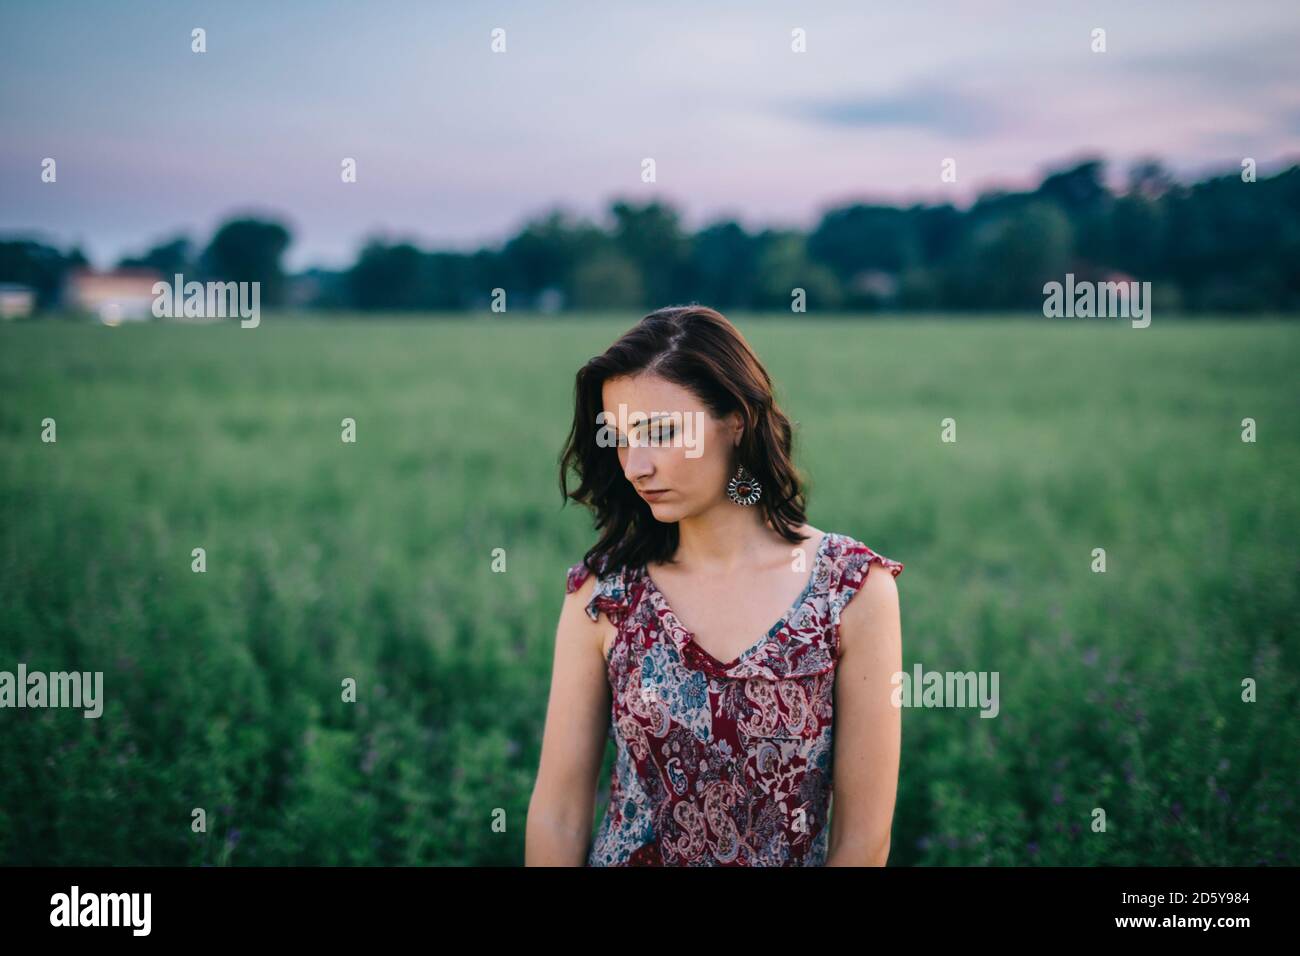 Portrait of a melancholic woman wearing a dress in a green field Stock Photo